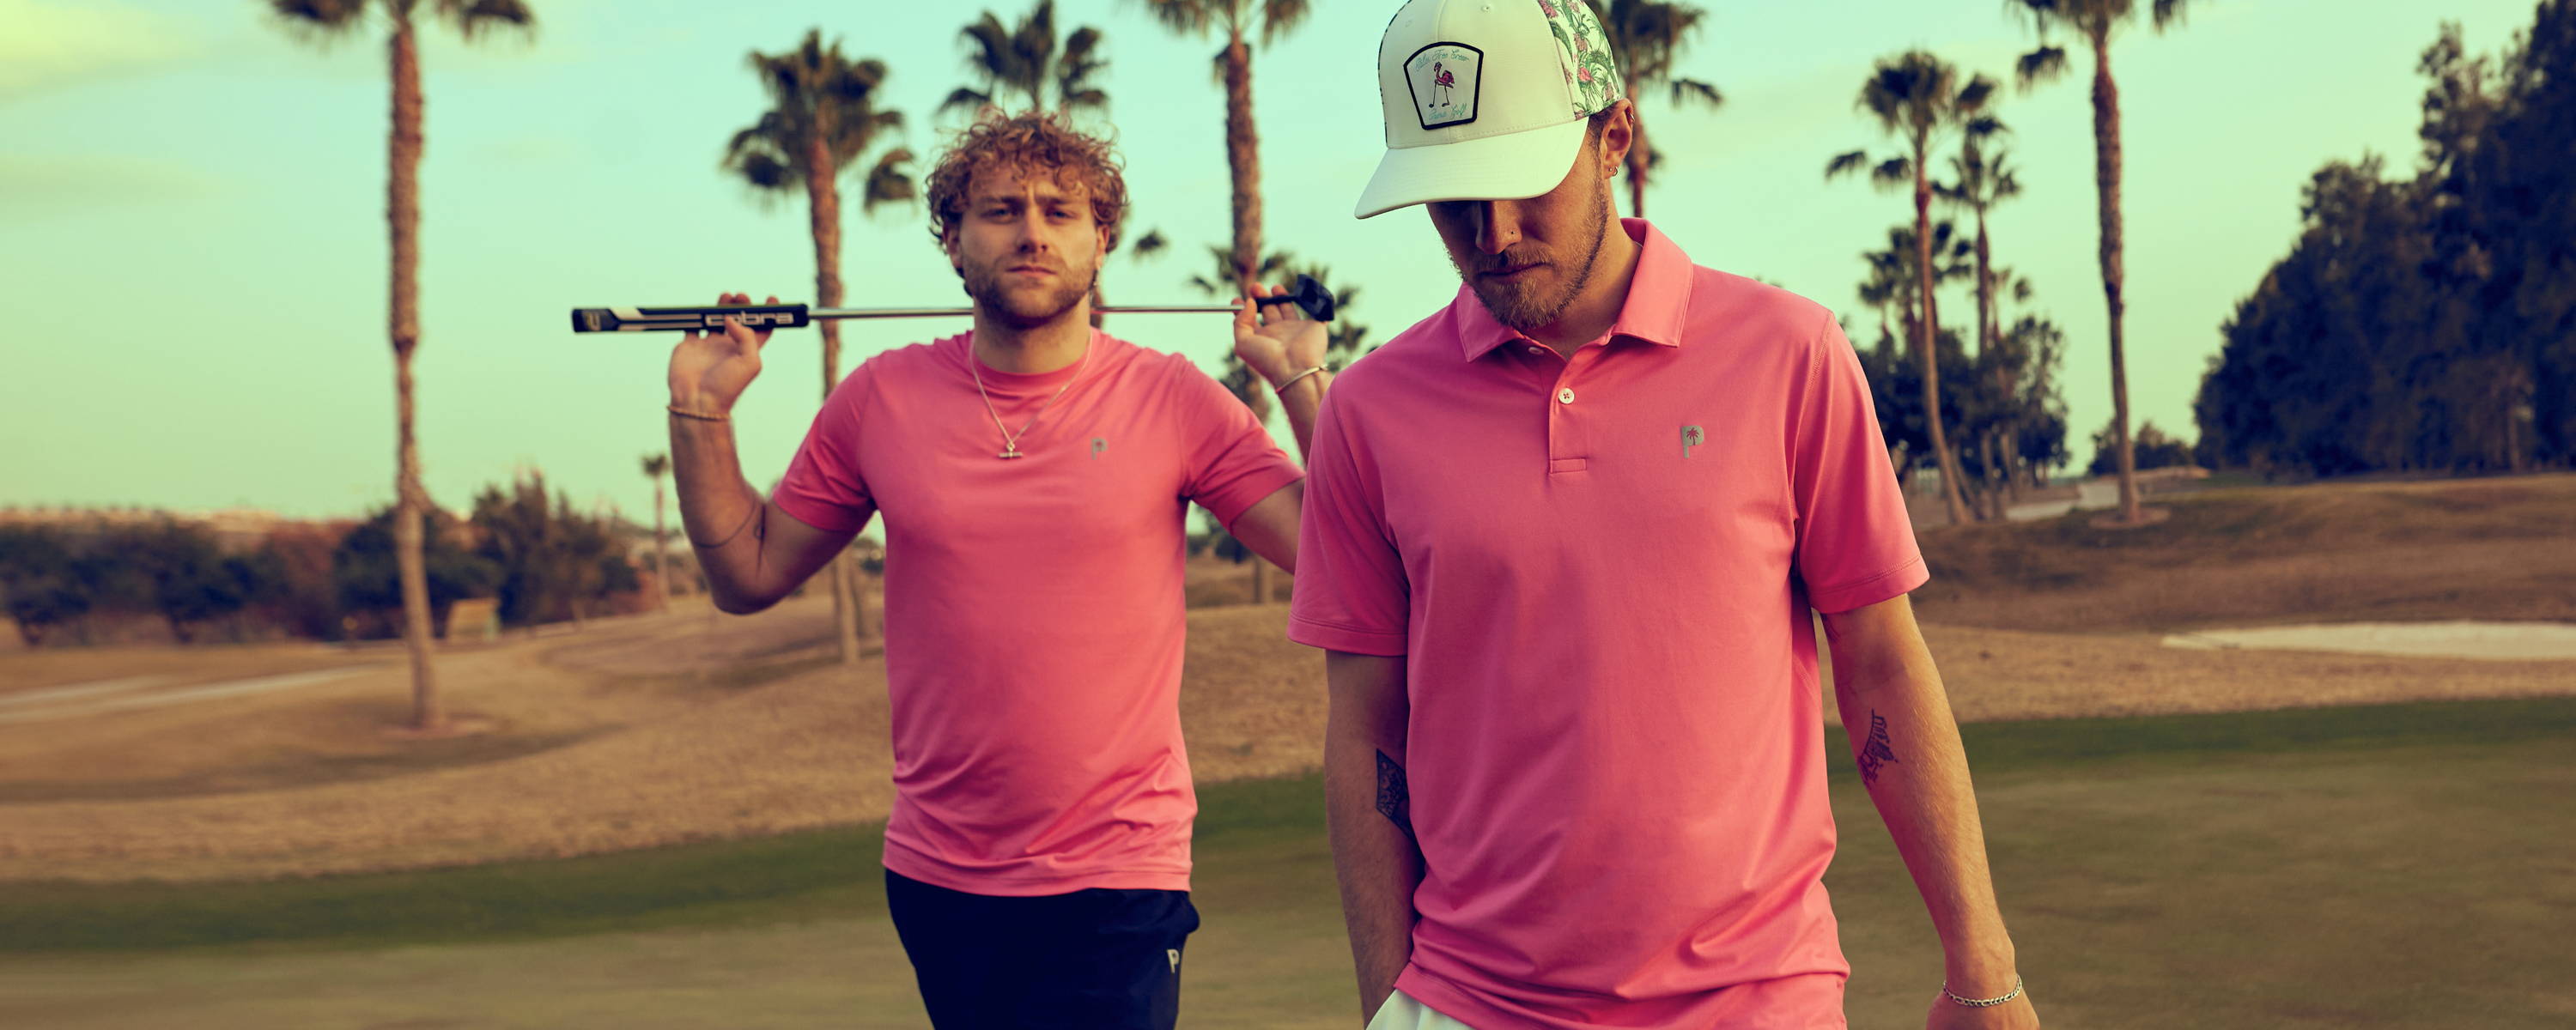 Puma X Palm Tree Crew Golf Clothing